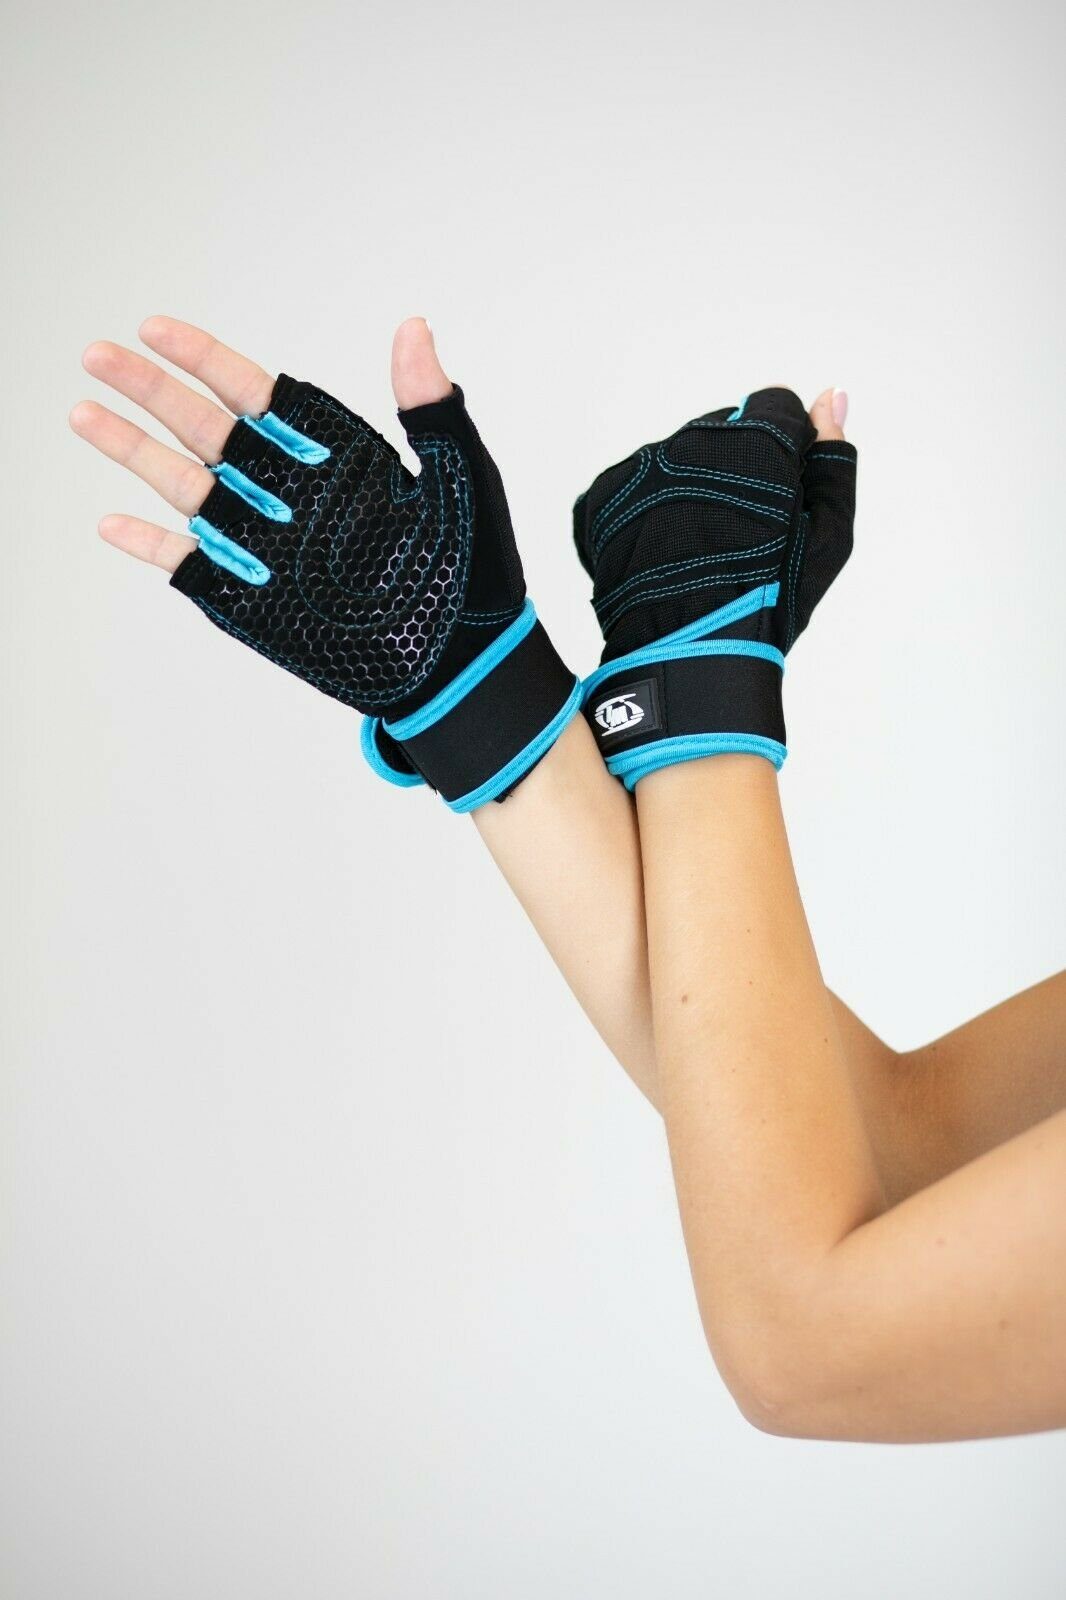 Lorey Medtec Multisporthandschuhe Trainingshandschuhe Fitness Hochwertige Handschuhe, Fitnesshandschuhe